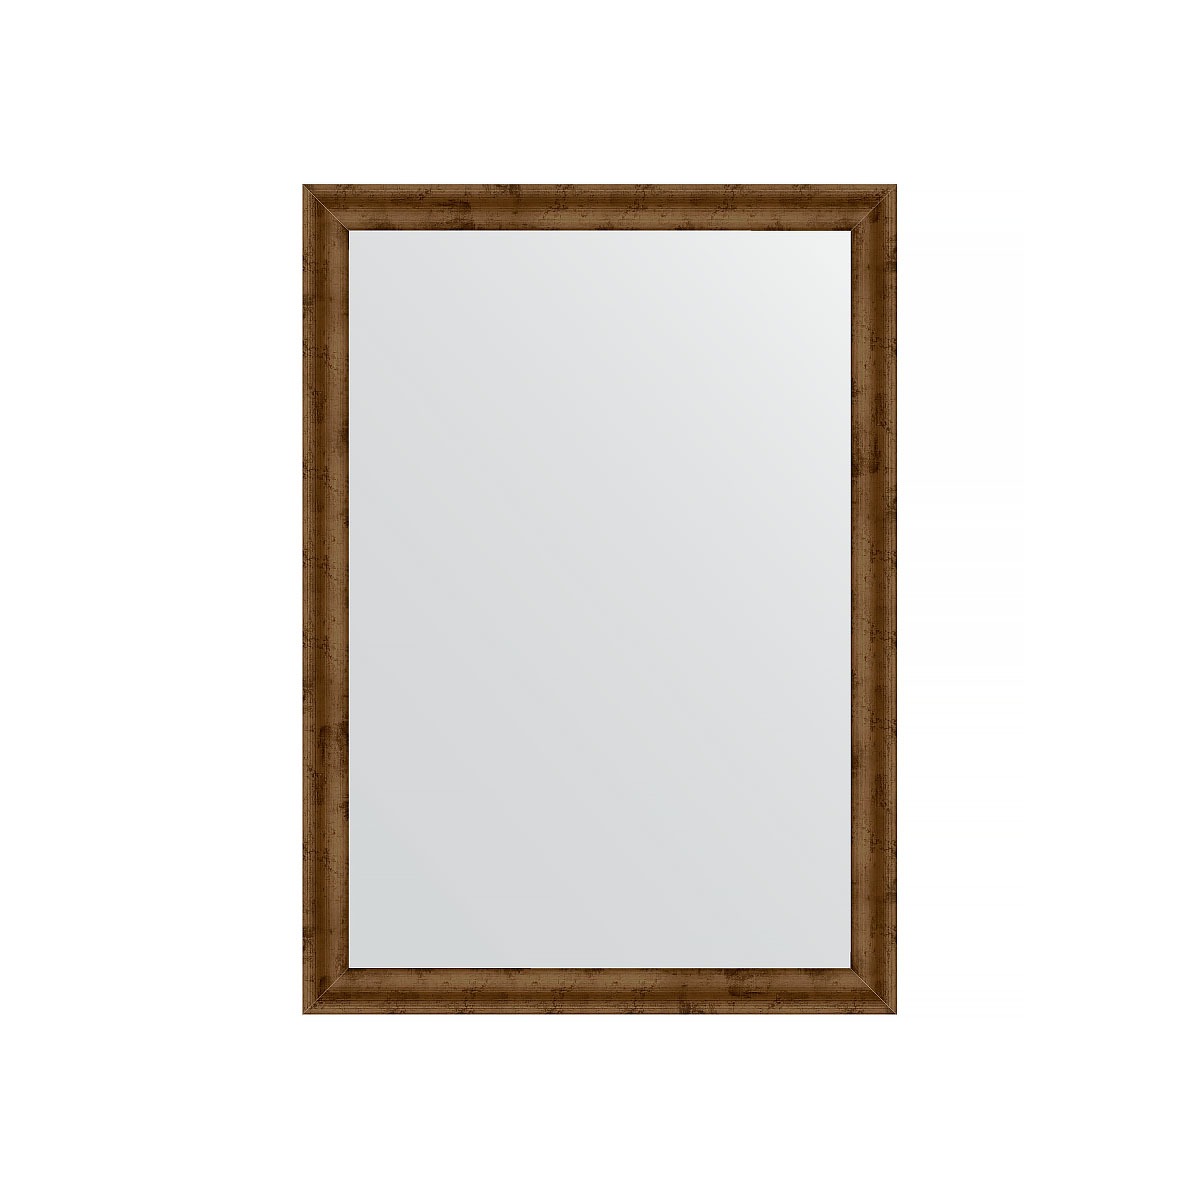 Зеркало в багетной раме Evoform красная бронза 37 мм 50х70 см зеркало evoform со шлифованной кромкой 50х70 см